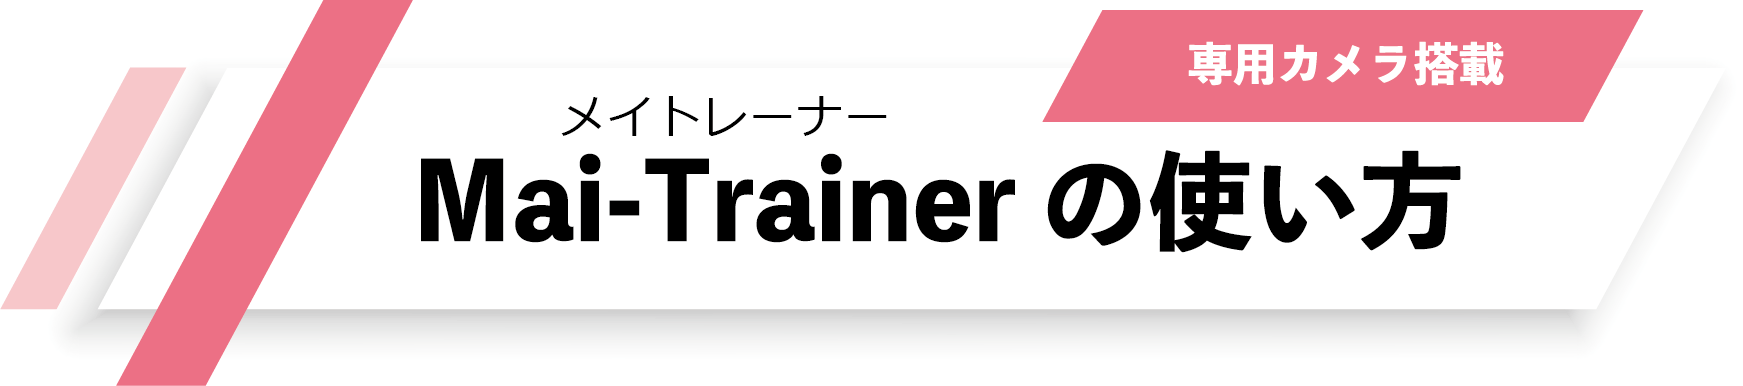 Mai-trainer by KOTOBUKI Medical株式会社